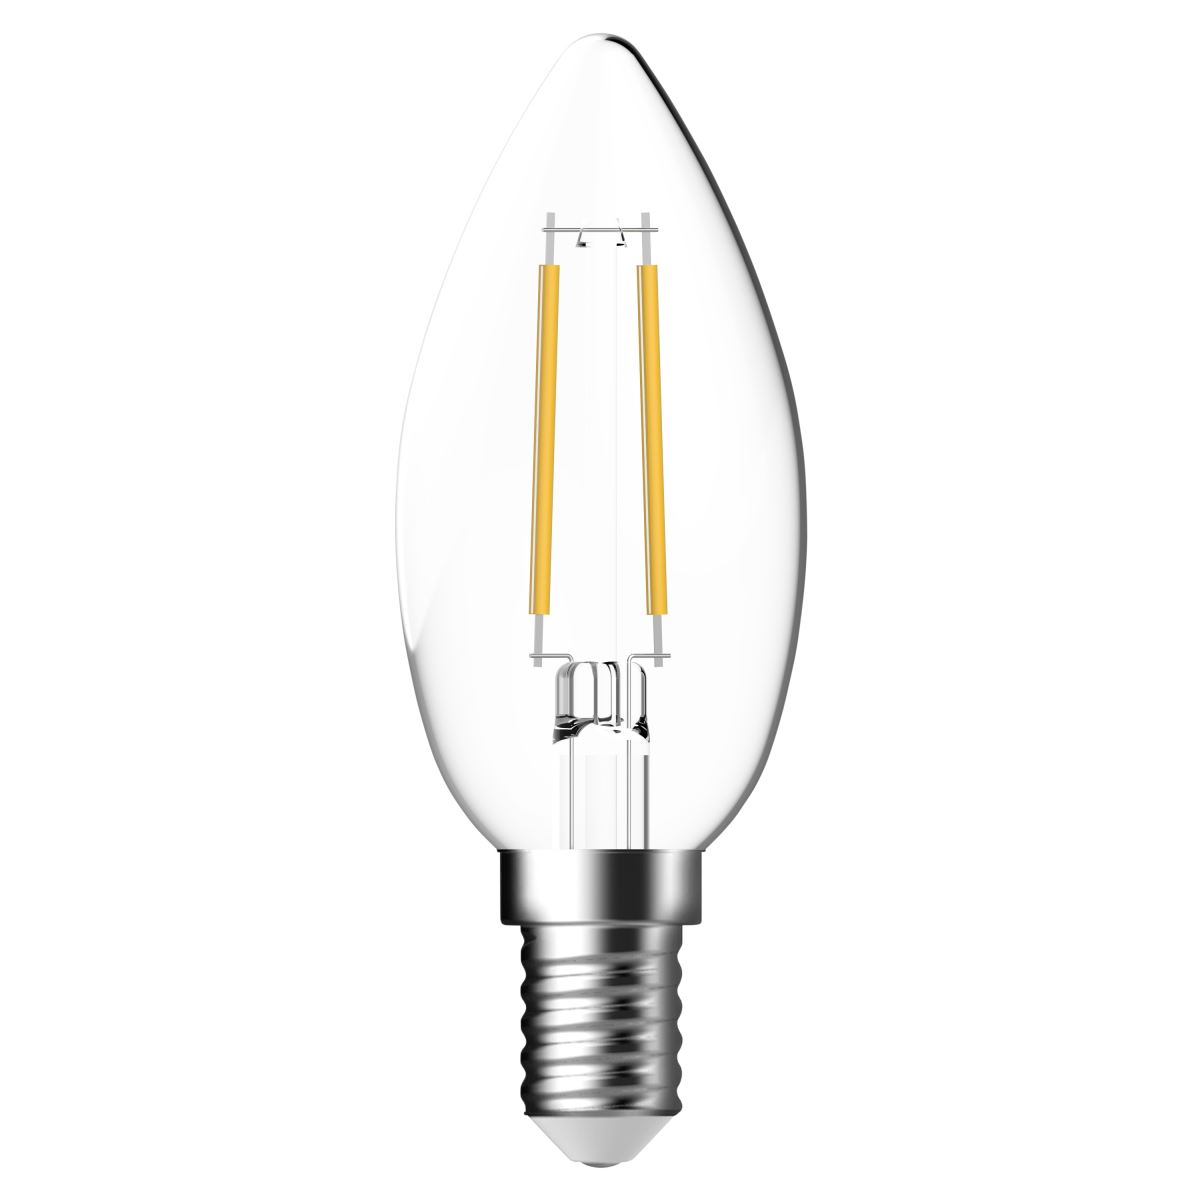 Nordlux Energetic LED Leuchtmittel E14 C35 Filament klar 806lm 2700K 6,3W 80Ra 360° 3,5x3,5x9,7cm von Energetic